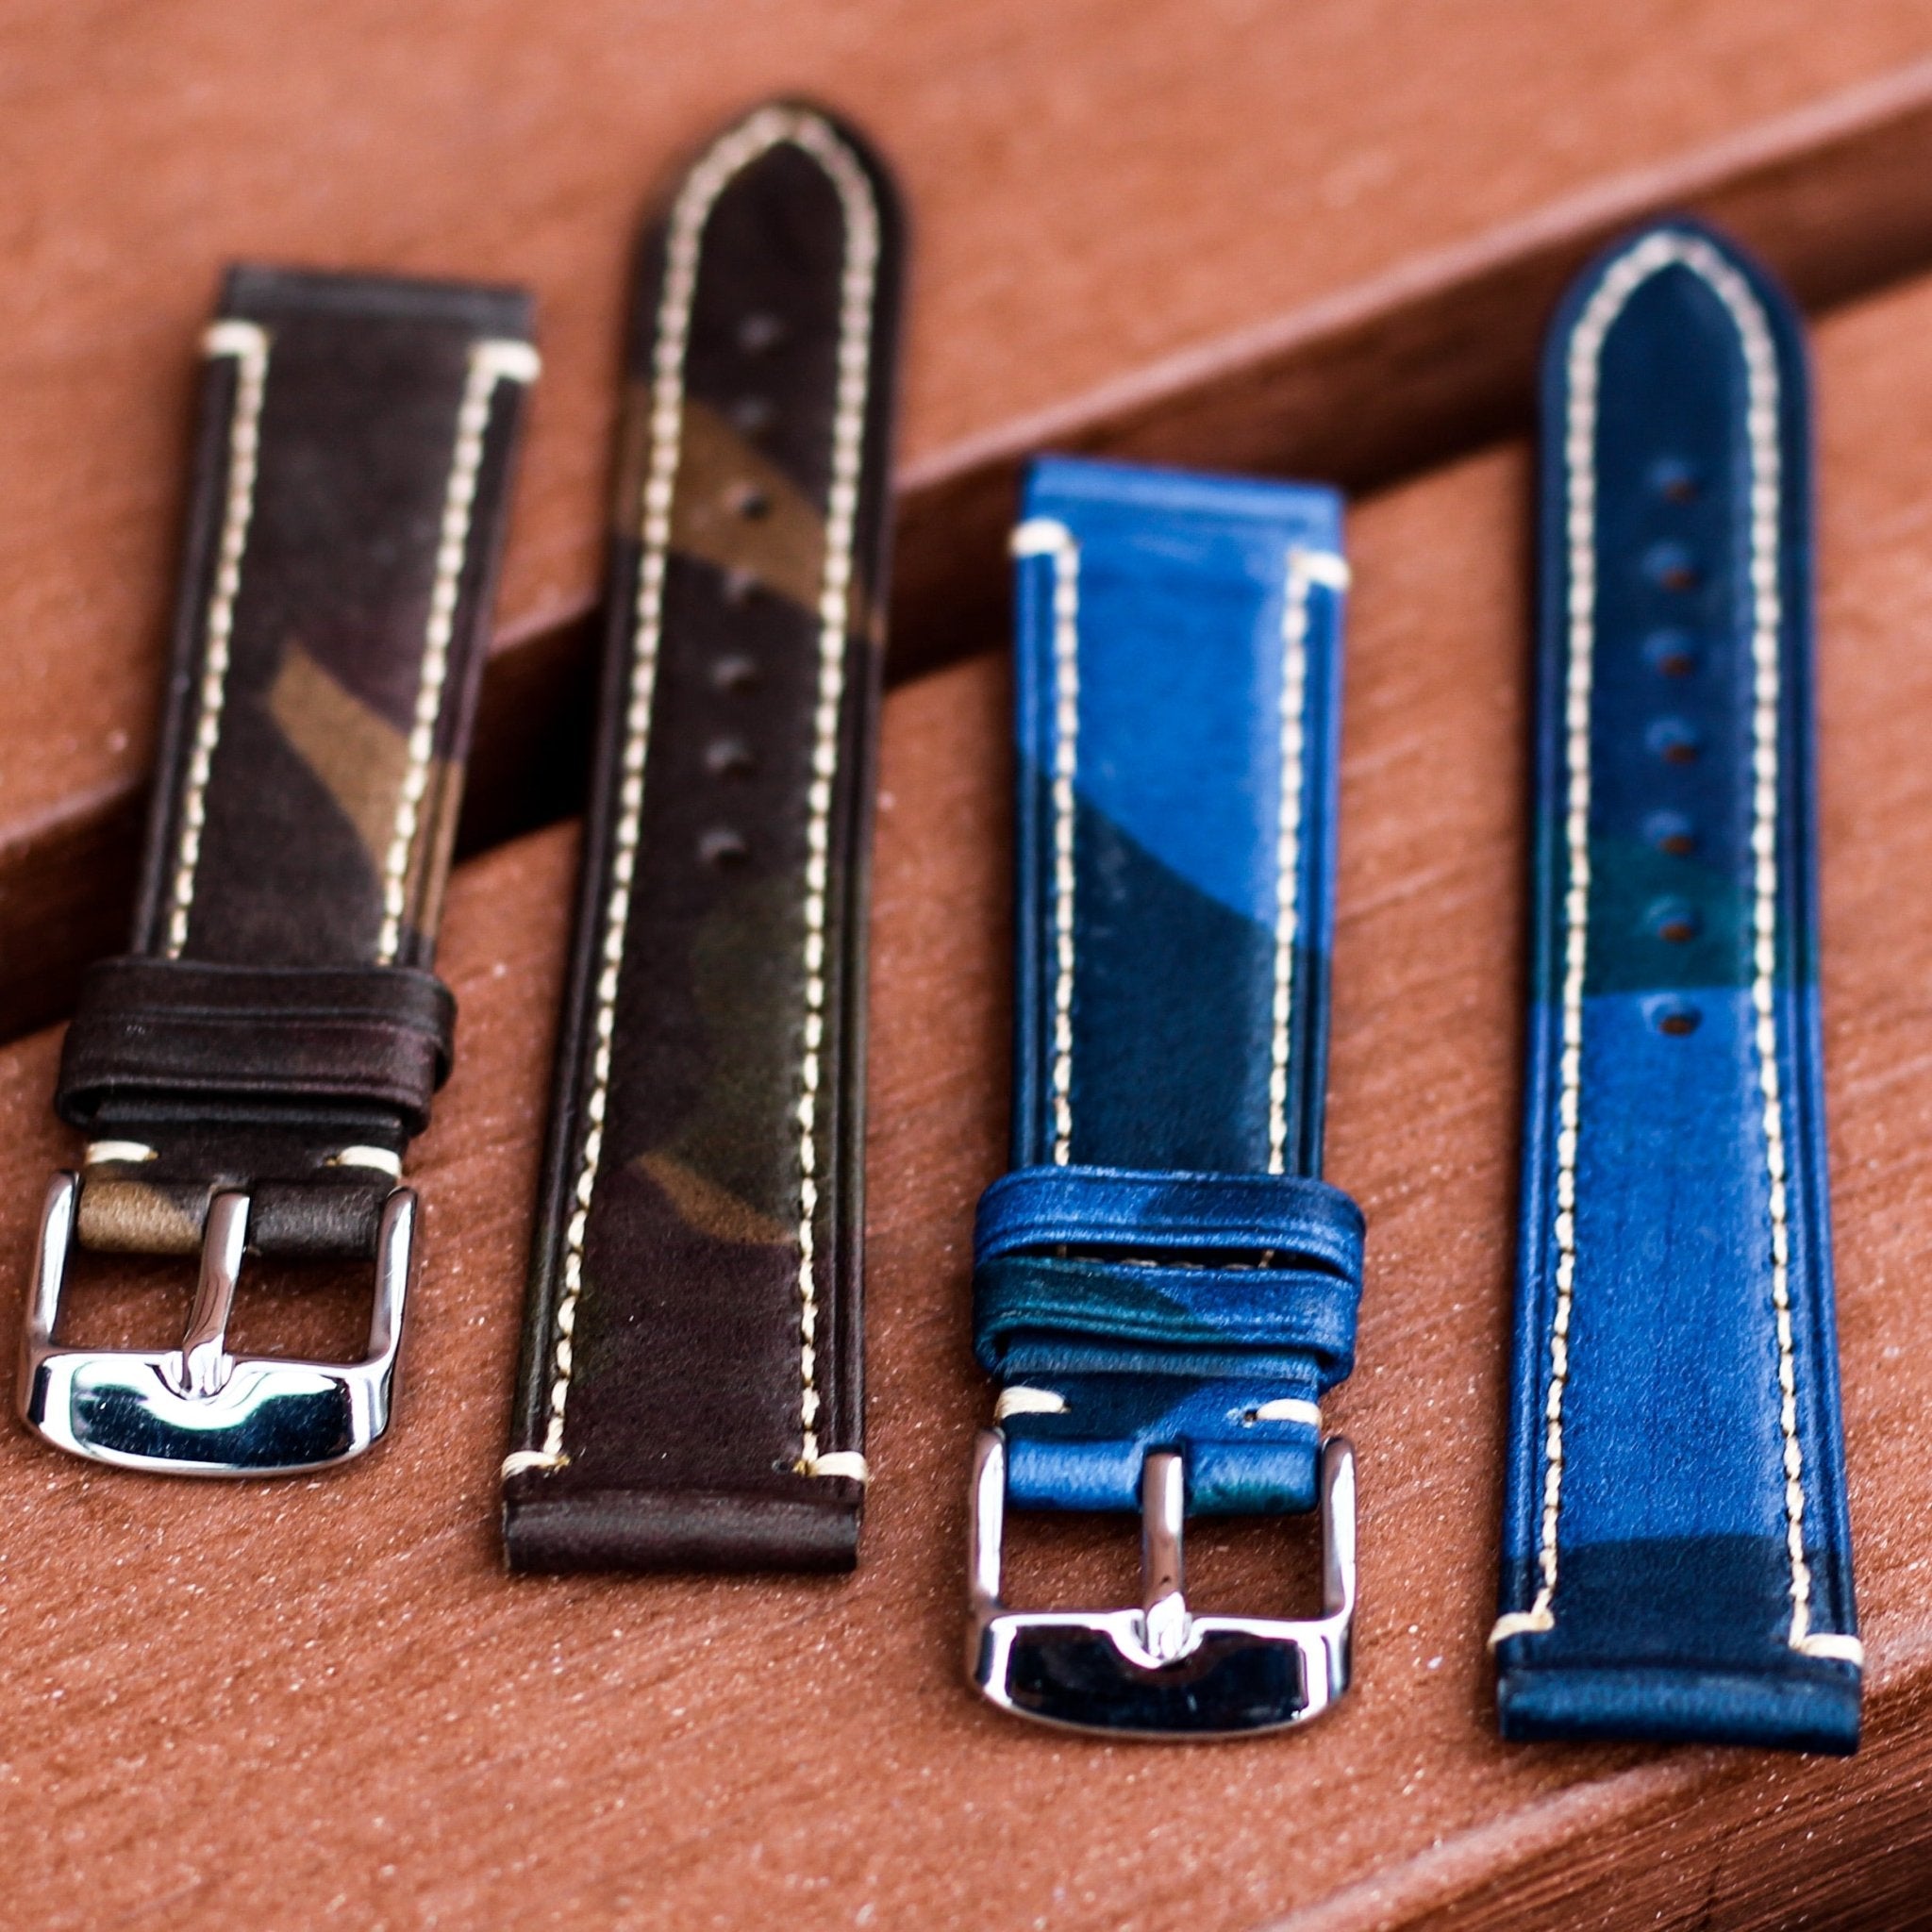 Imola Brown Camouflage | Battle Series Calf Leather Watch Strap - Samurai Vintage Co.